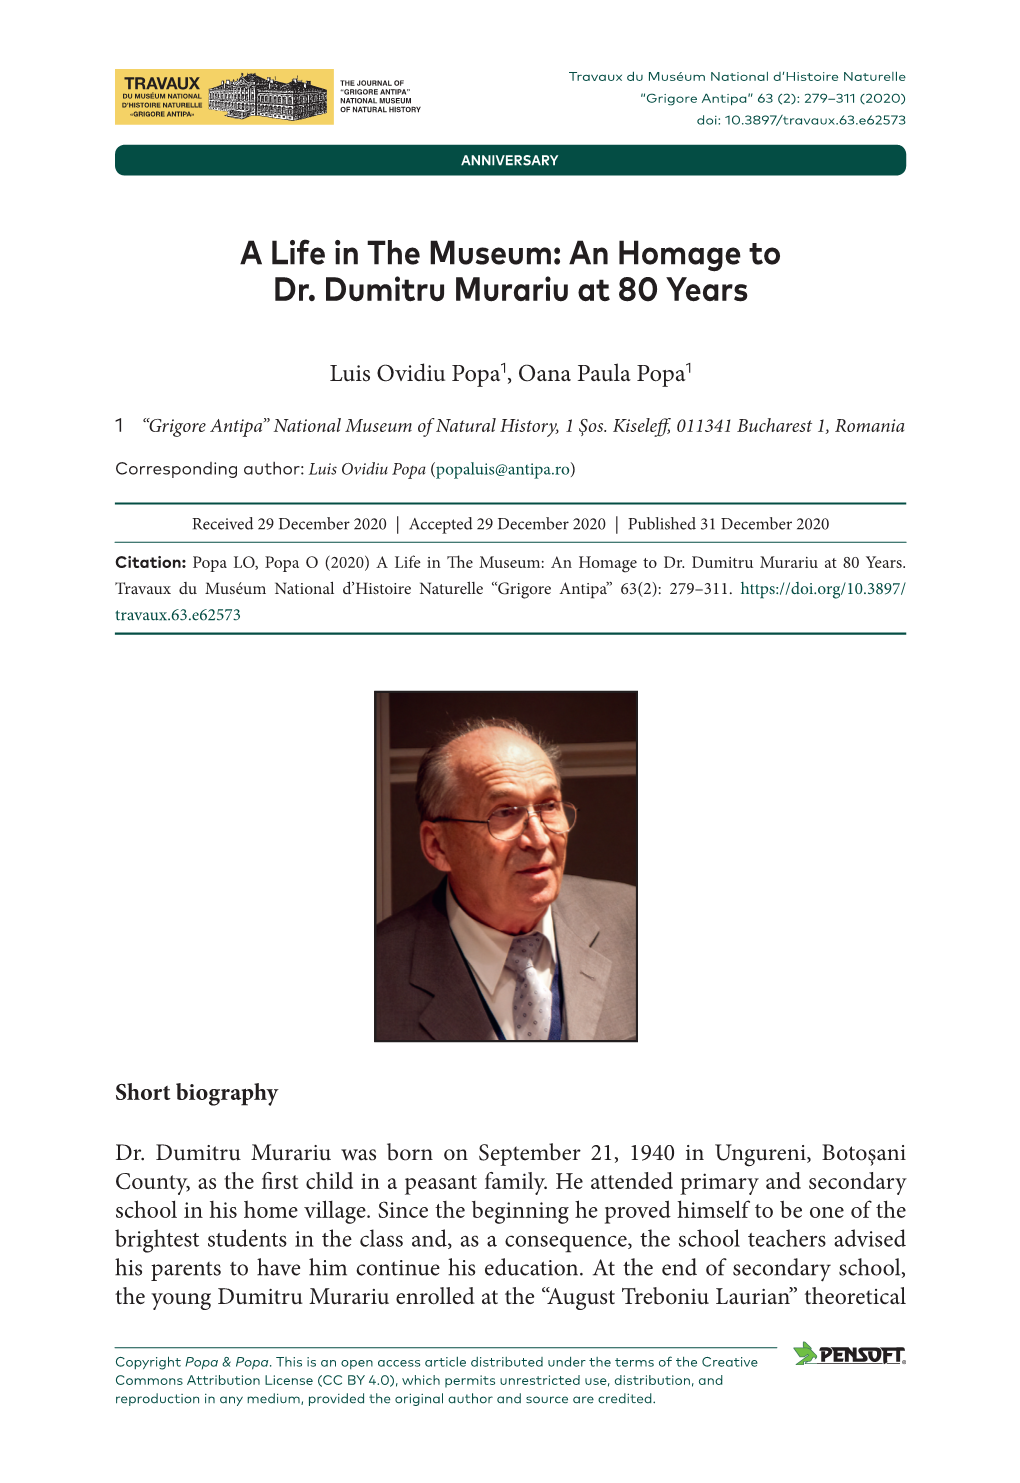 An Homage to Dr. Dumitru Murariu at 80 Years